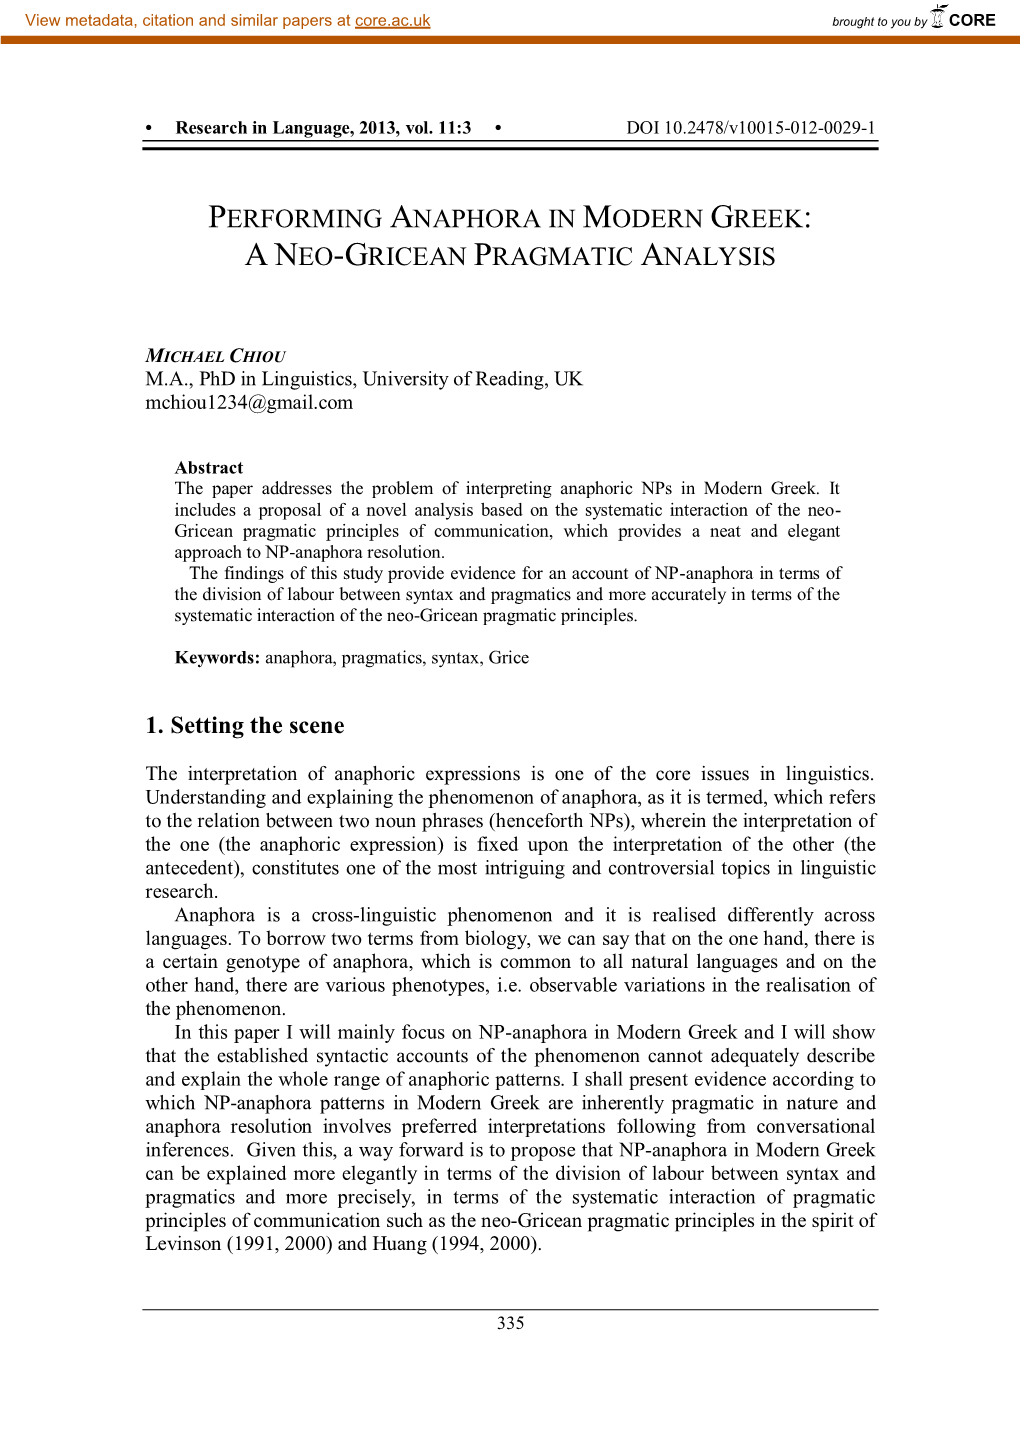 Performing Anaphora in Modern Greek: a Neo-Gricean Pragmatic Analysis